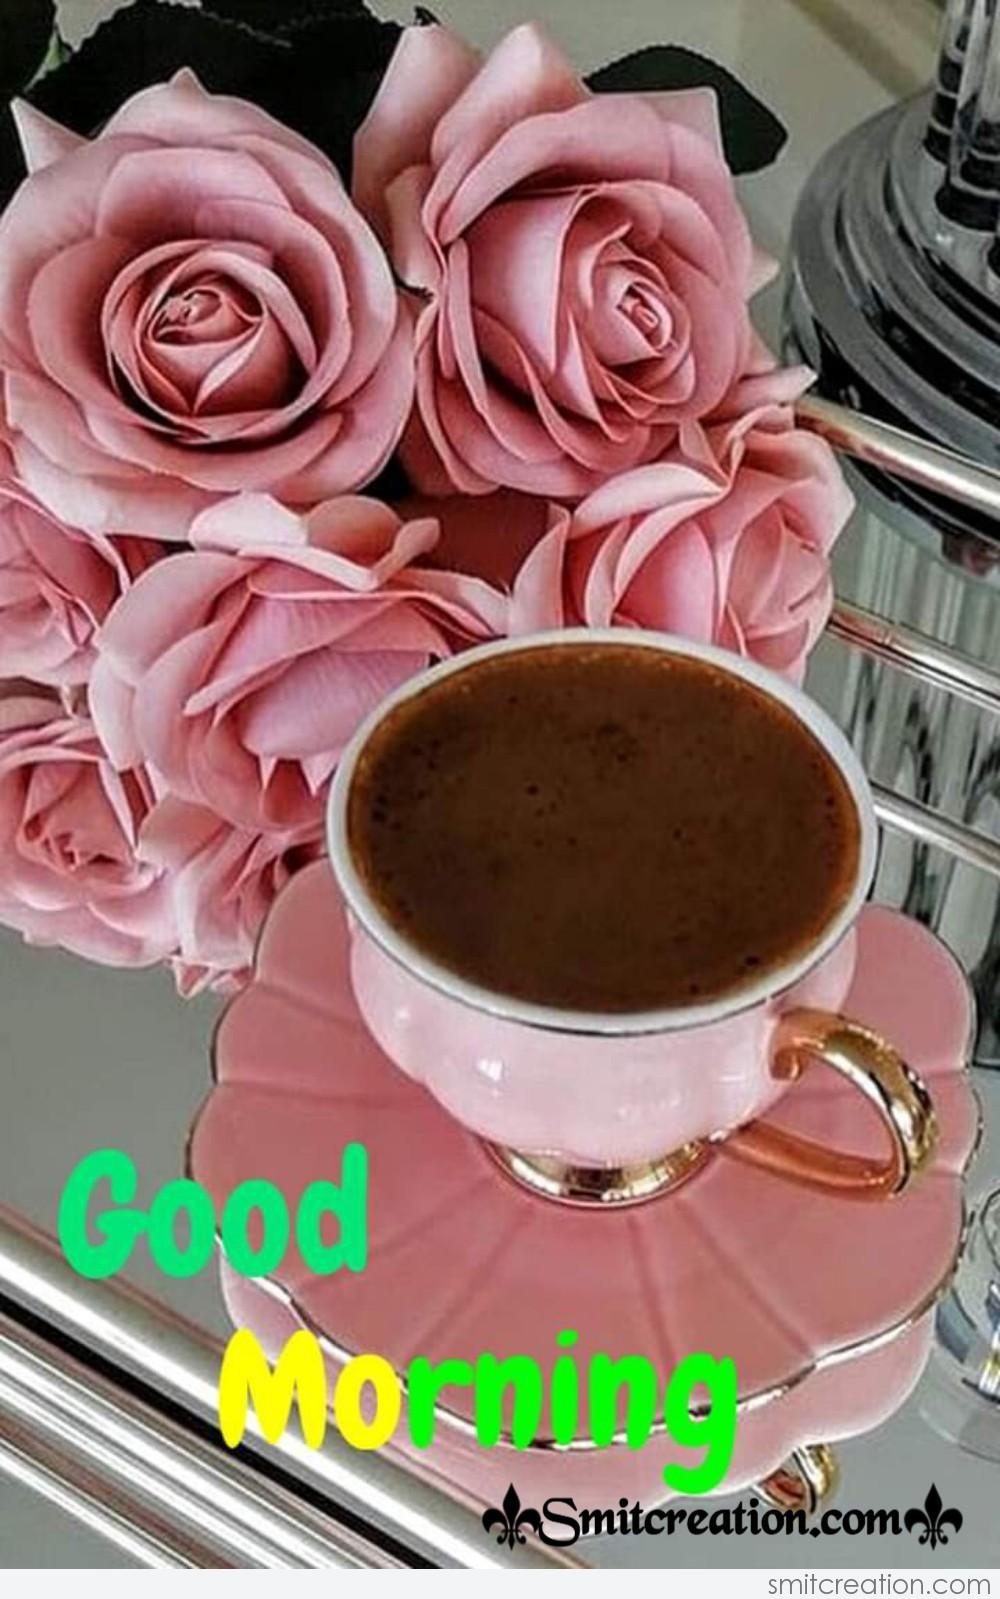 Good Morning Coffee With Rose Flowers - SmitCreation.com